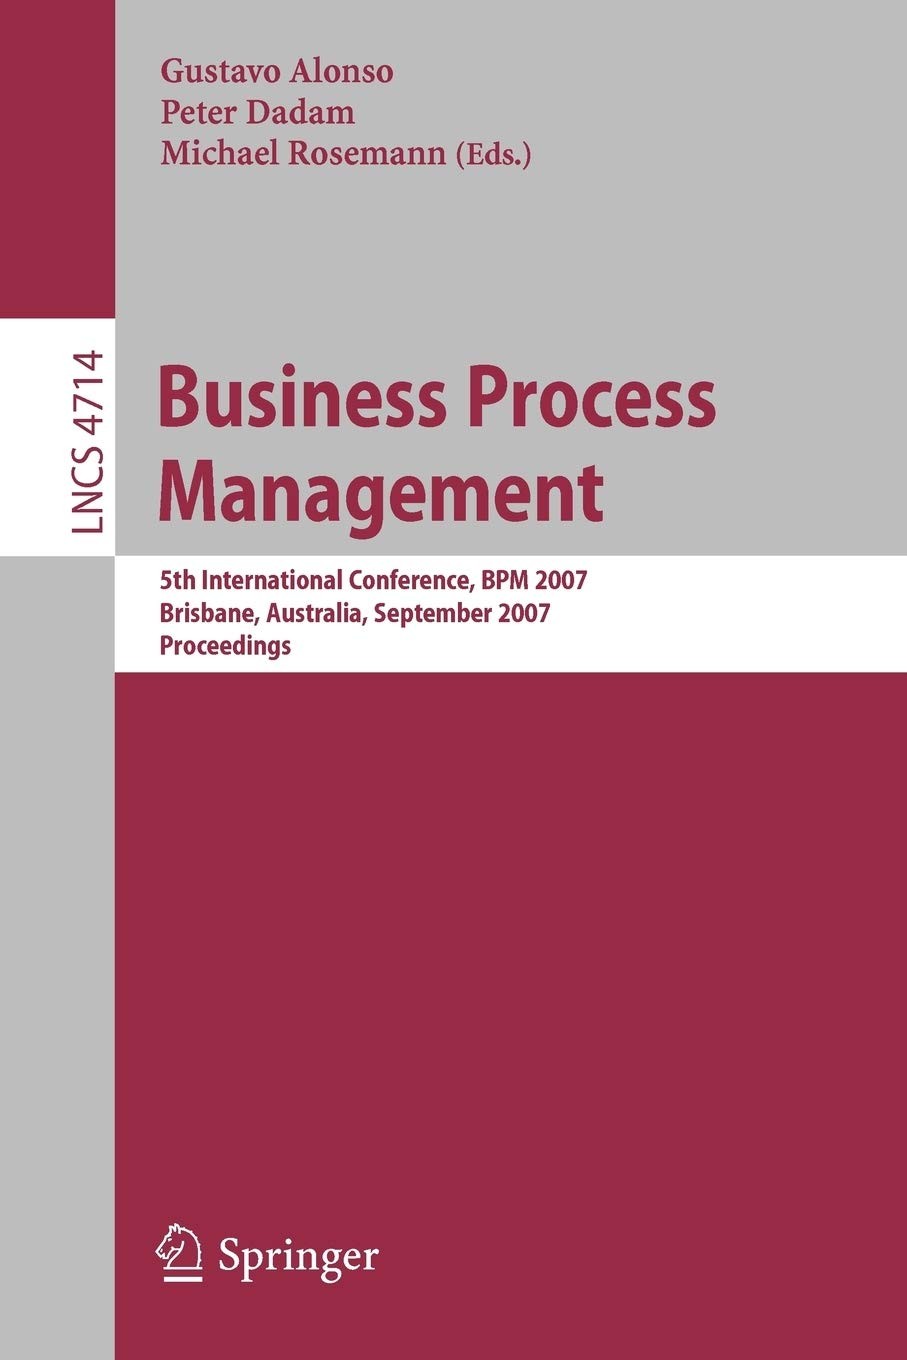 Business Process Management: 5th International Conference, BPM 2007, Brisbane, Australia, September 24-28, 2007, Proceedings